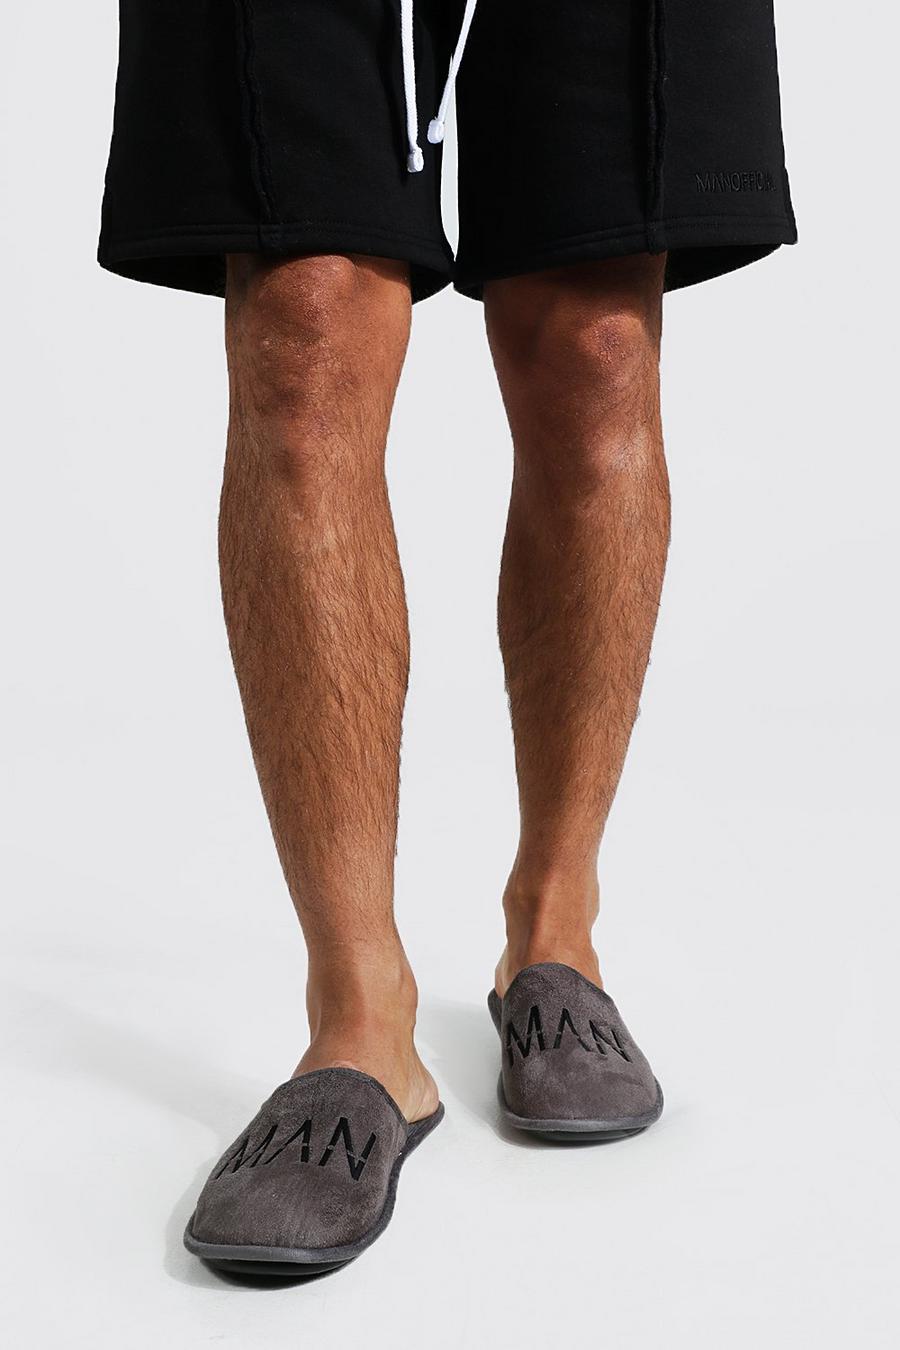 Pantofole Man Dash con ricami, Charcoal grey image number 1